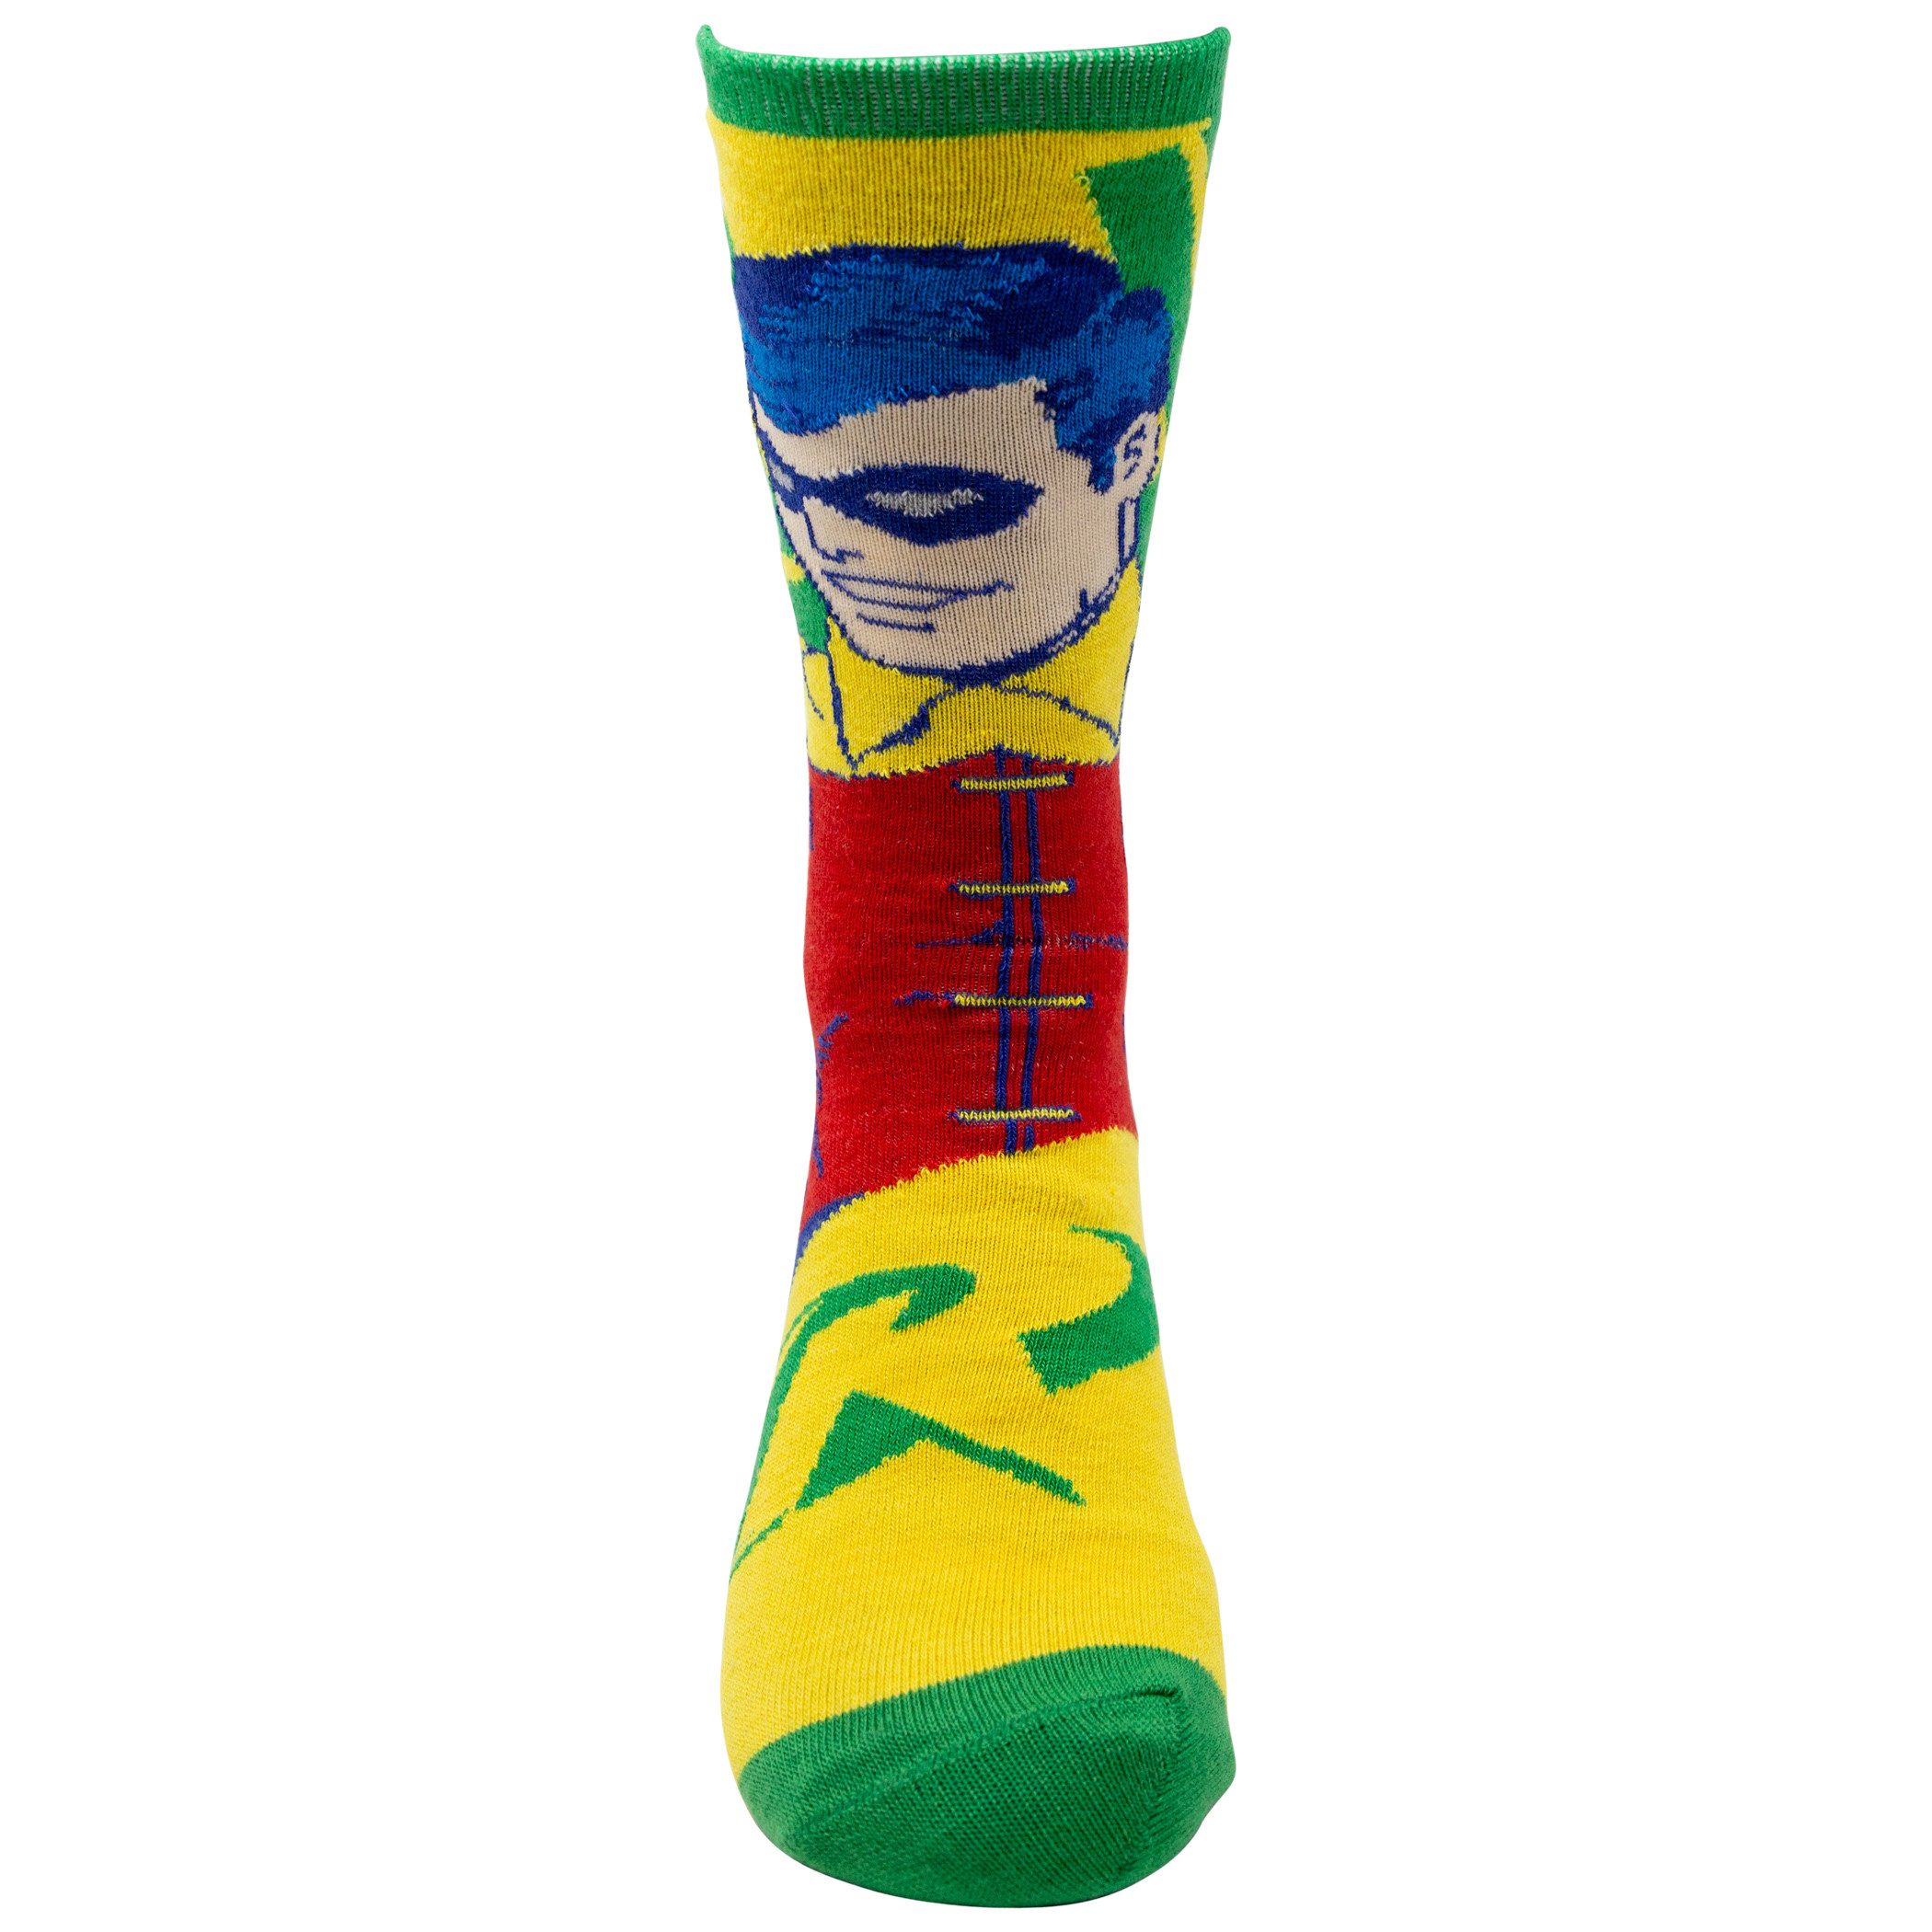 DC Comics Dark Knight Batman/Robin Reversible Crew Socks